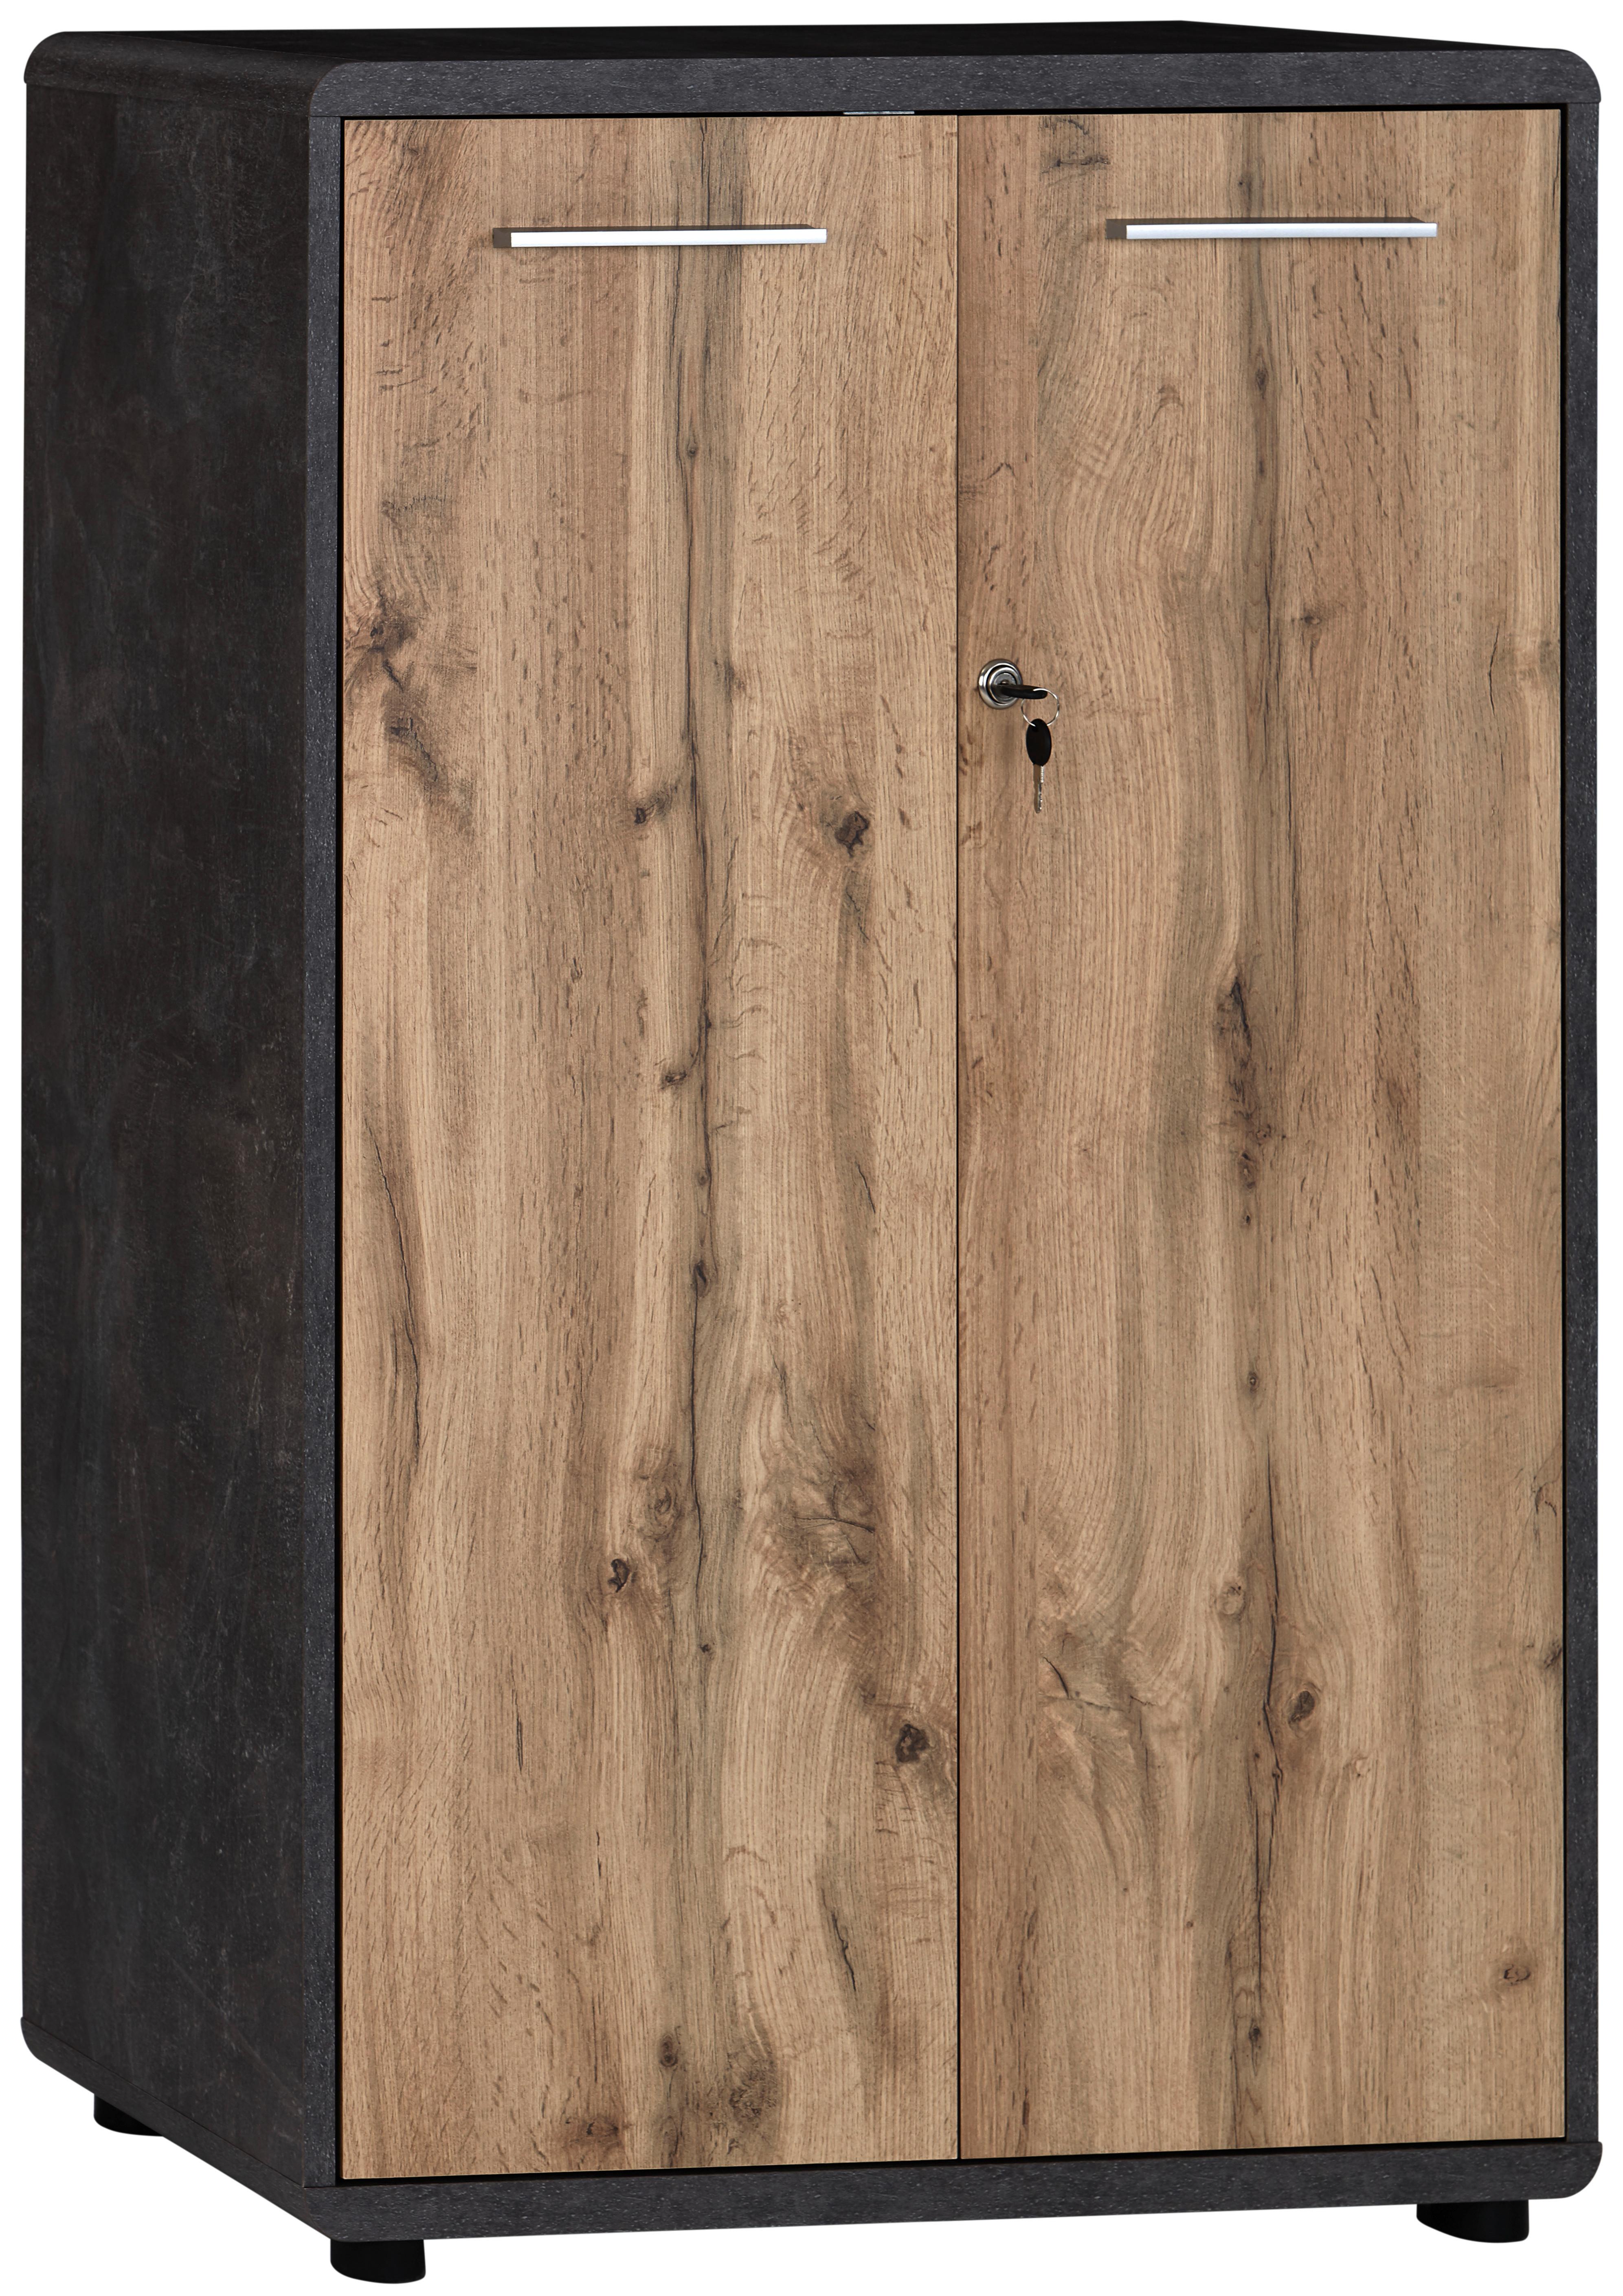 Pisarniška Omara Fontana Fts02 - temno siva/hrast, Moderno, leseni material (75/113,1/35cm) - Modern Living